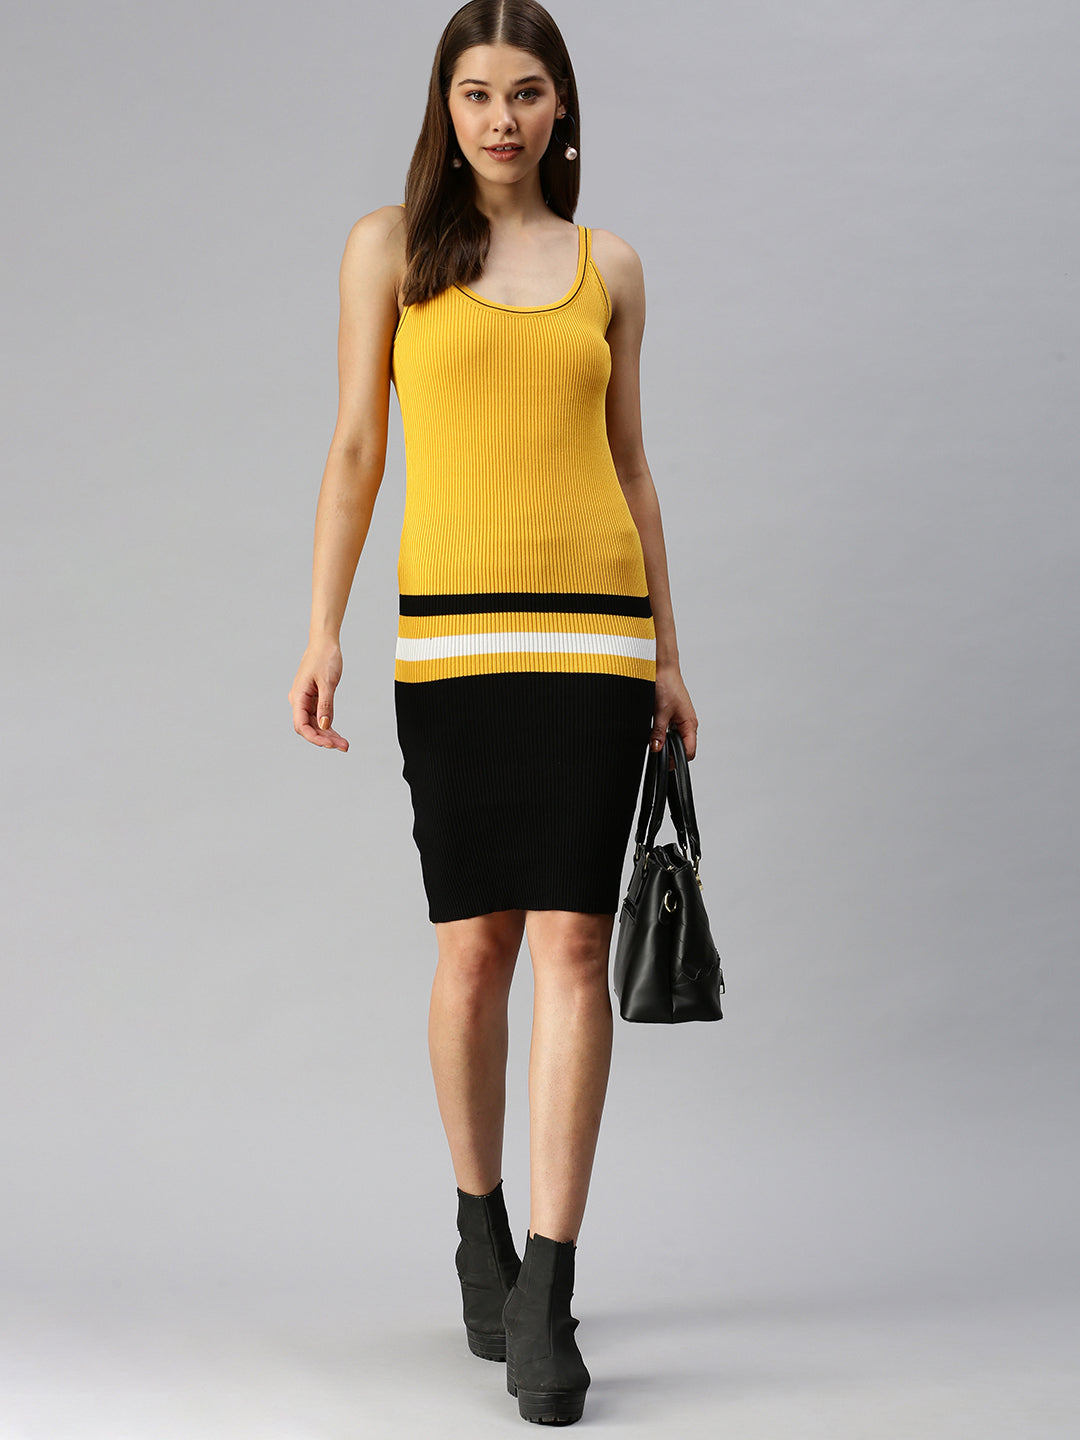 Women Shoulder Straps Solid Bodycon Yellow Dress